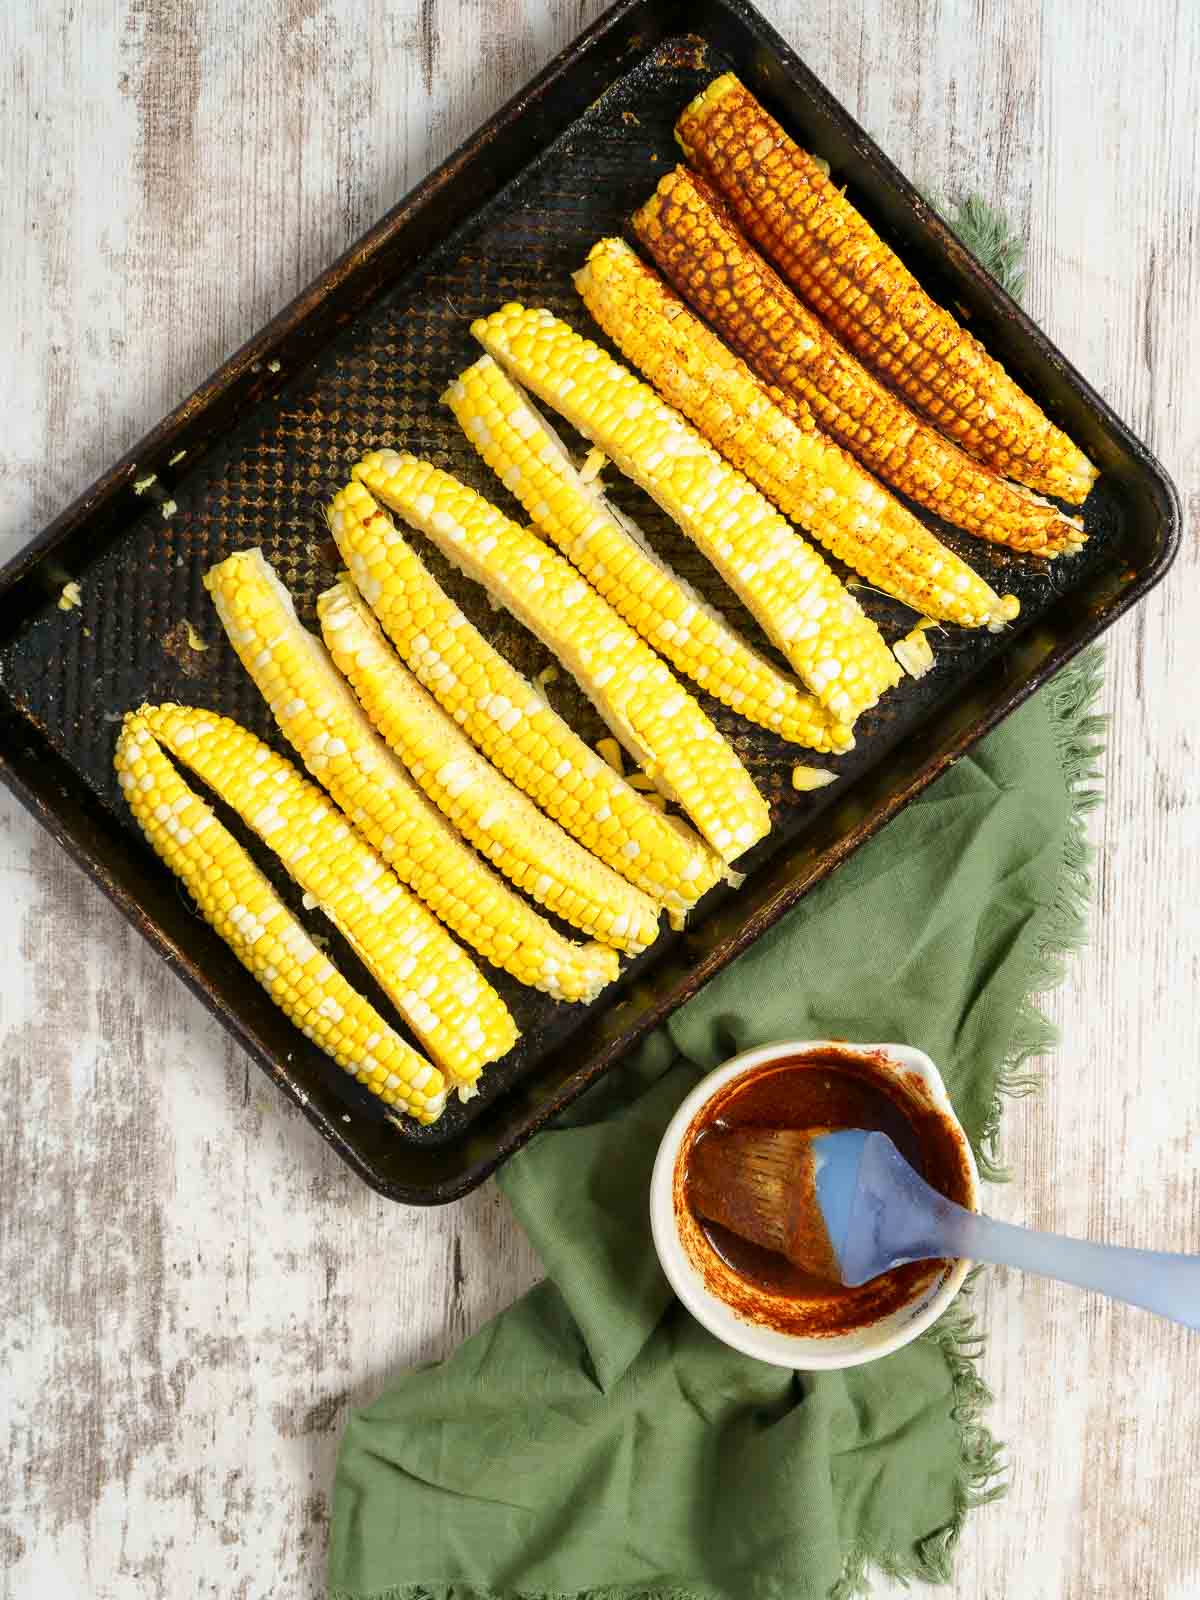 brushing corn ribs with seasoning butter